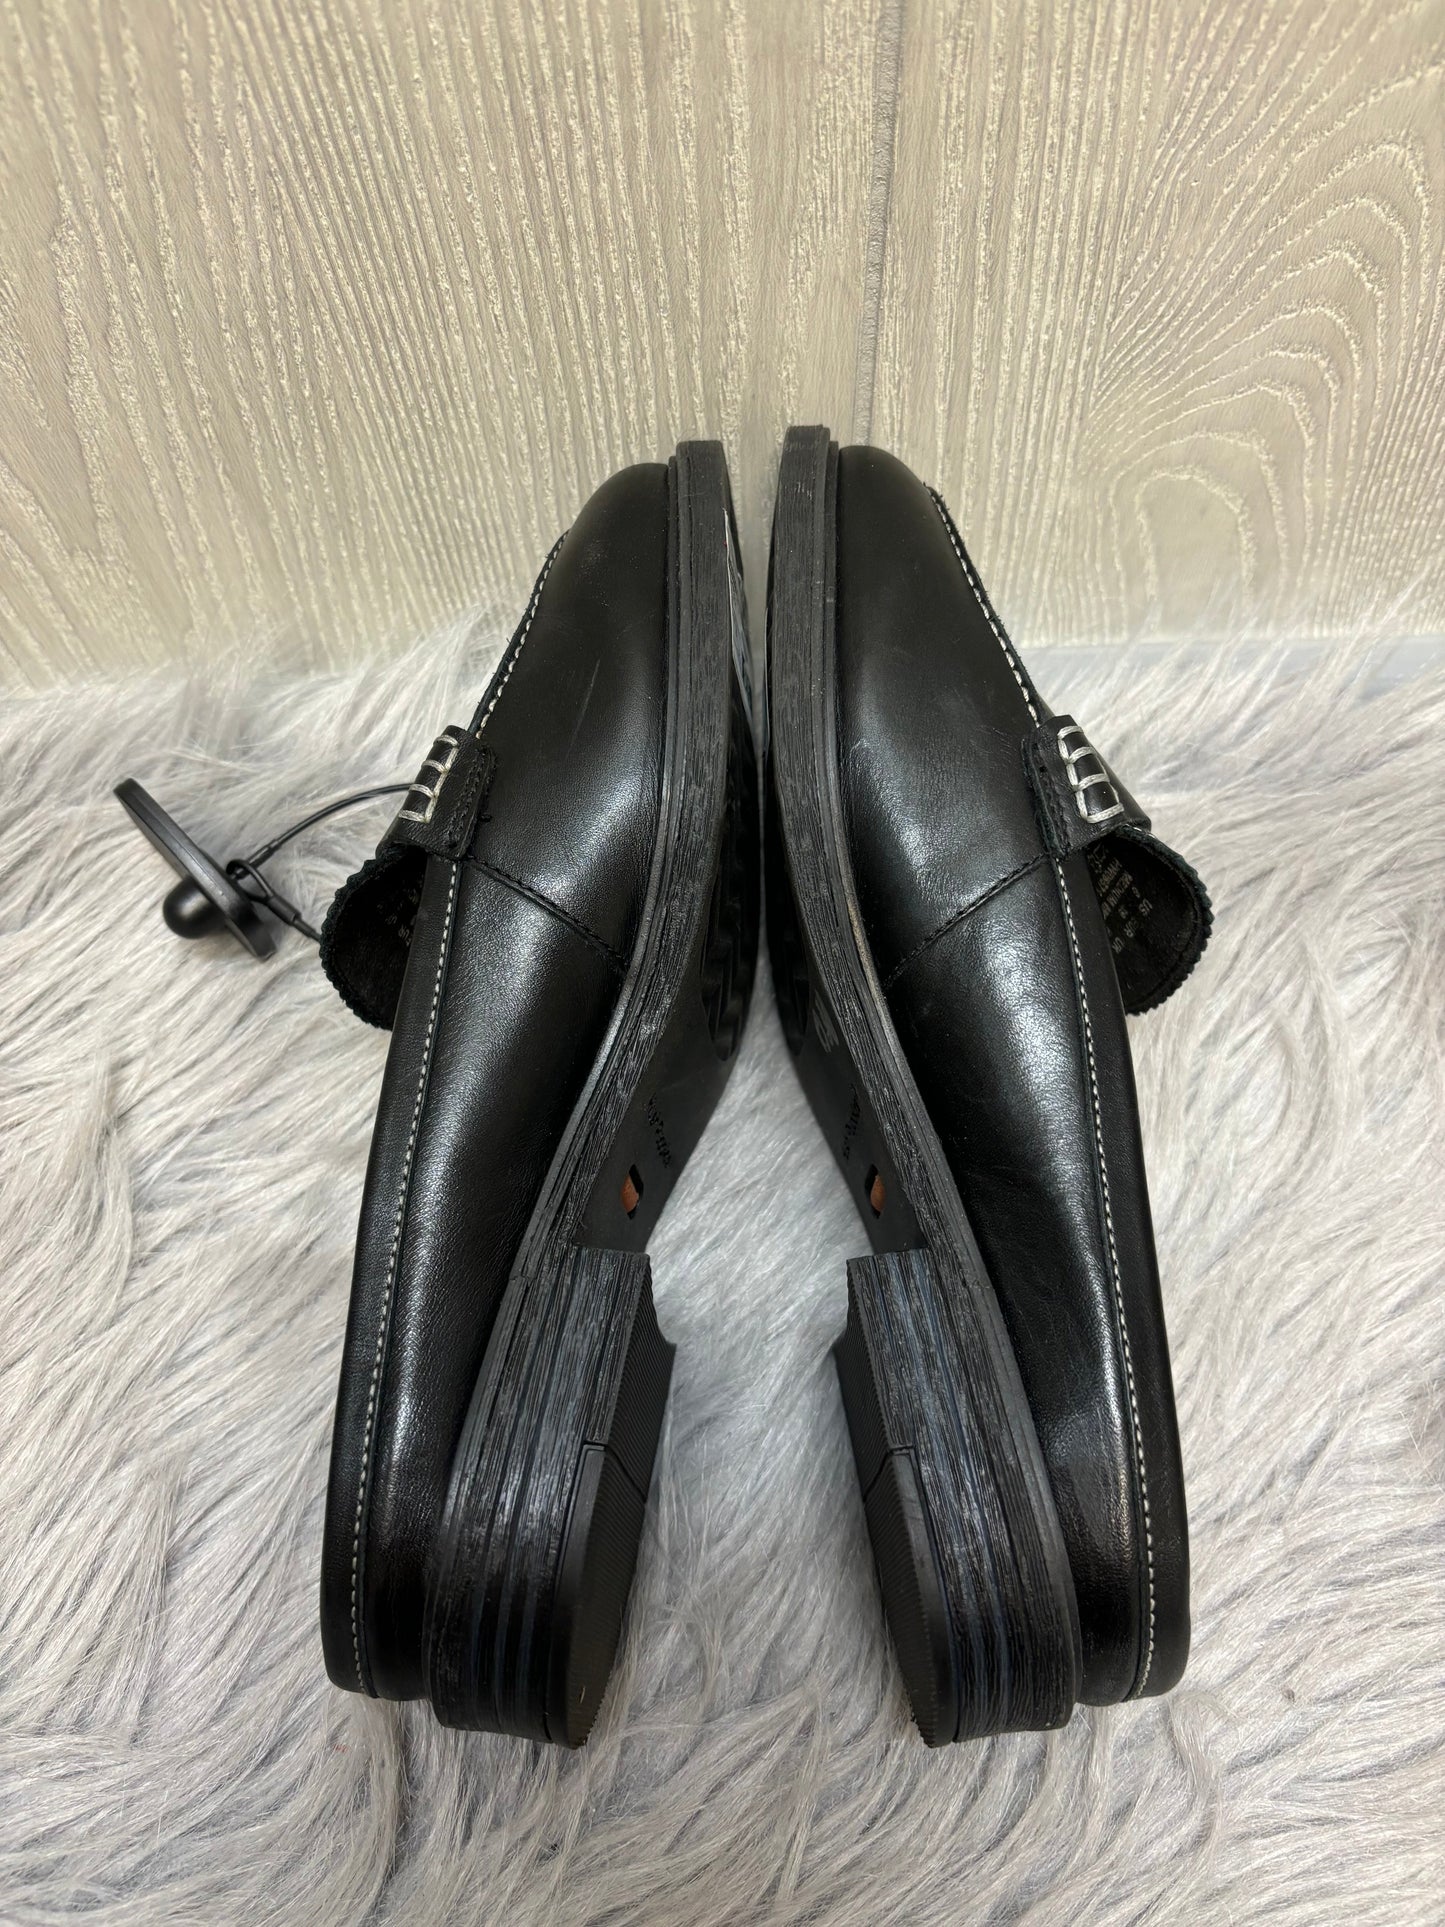 Black Shoes Flats Hush Puppies, Size 8